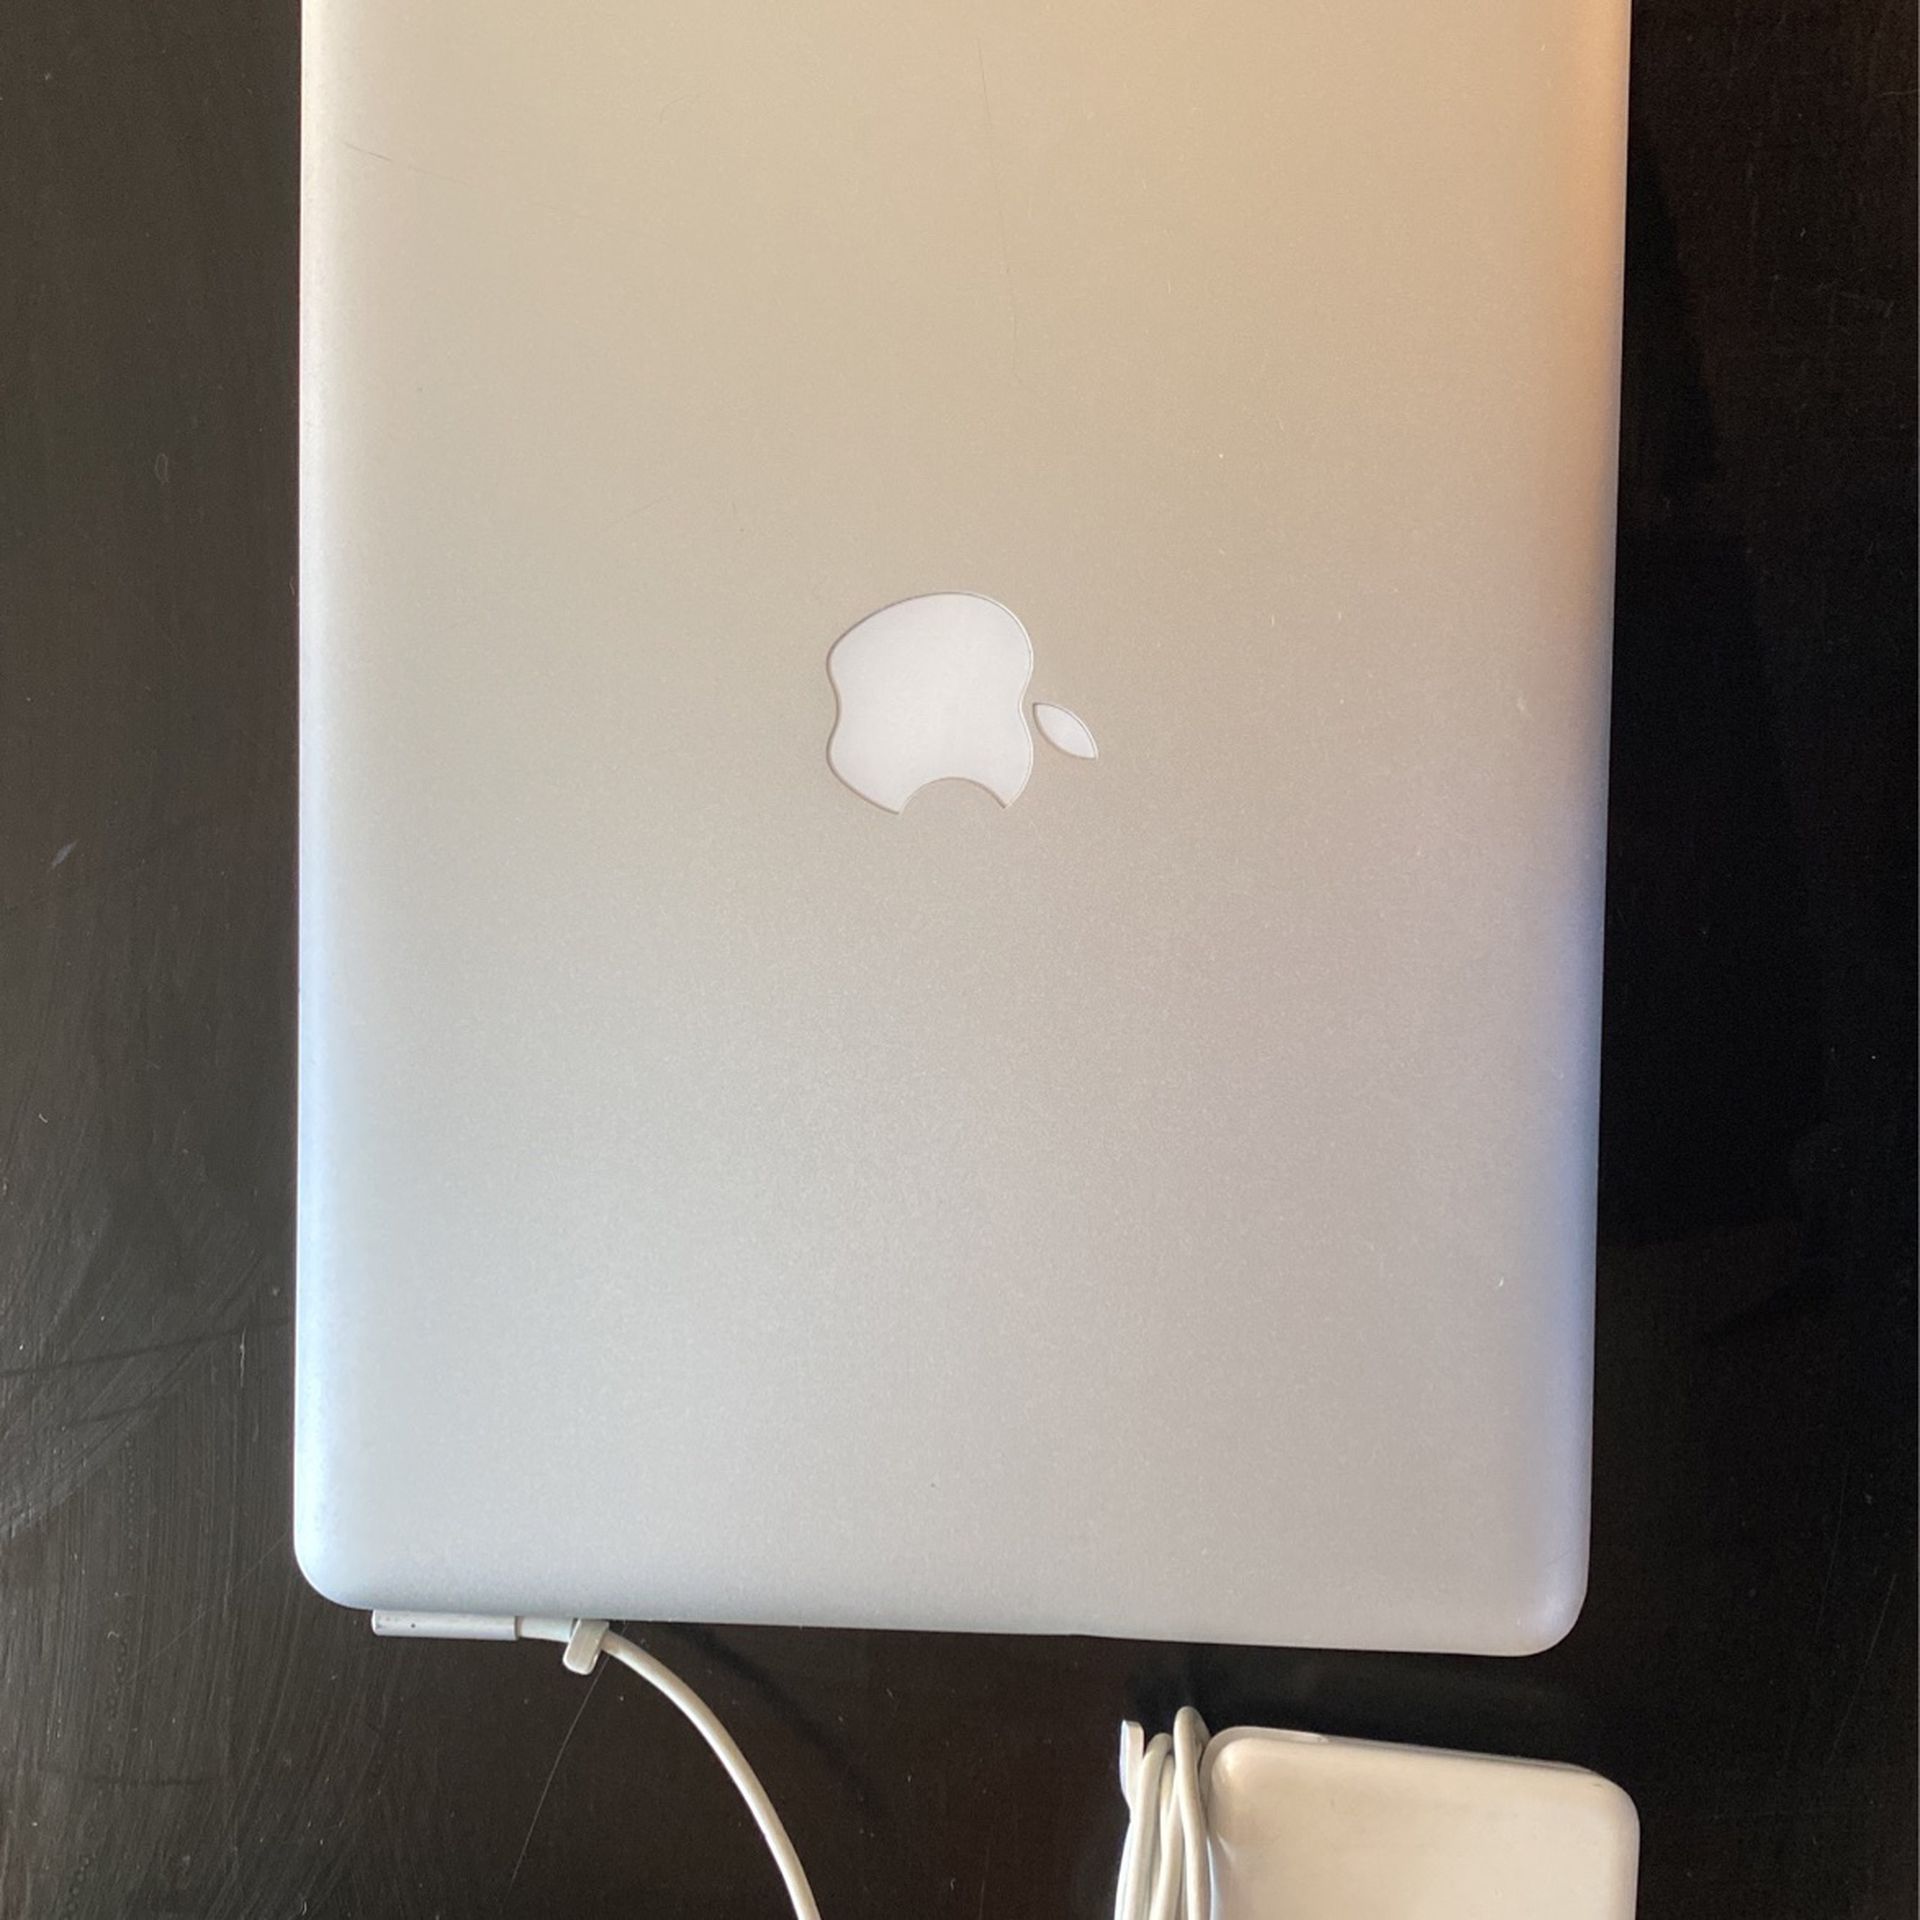 MacBook Pro 13” Mid 2012 Excellent Condition